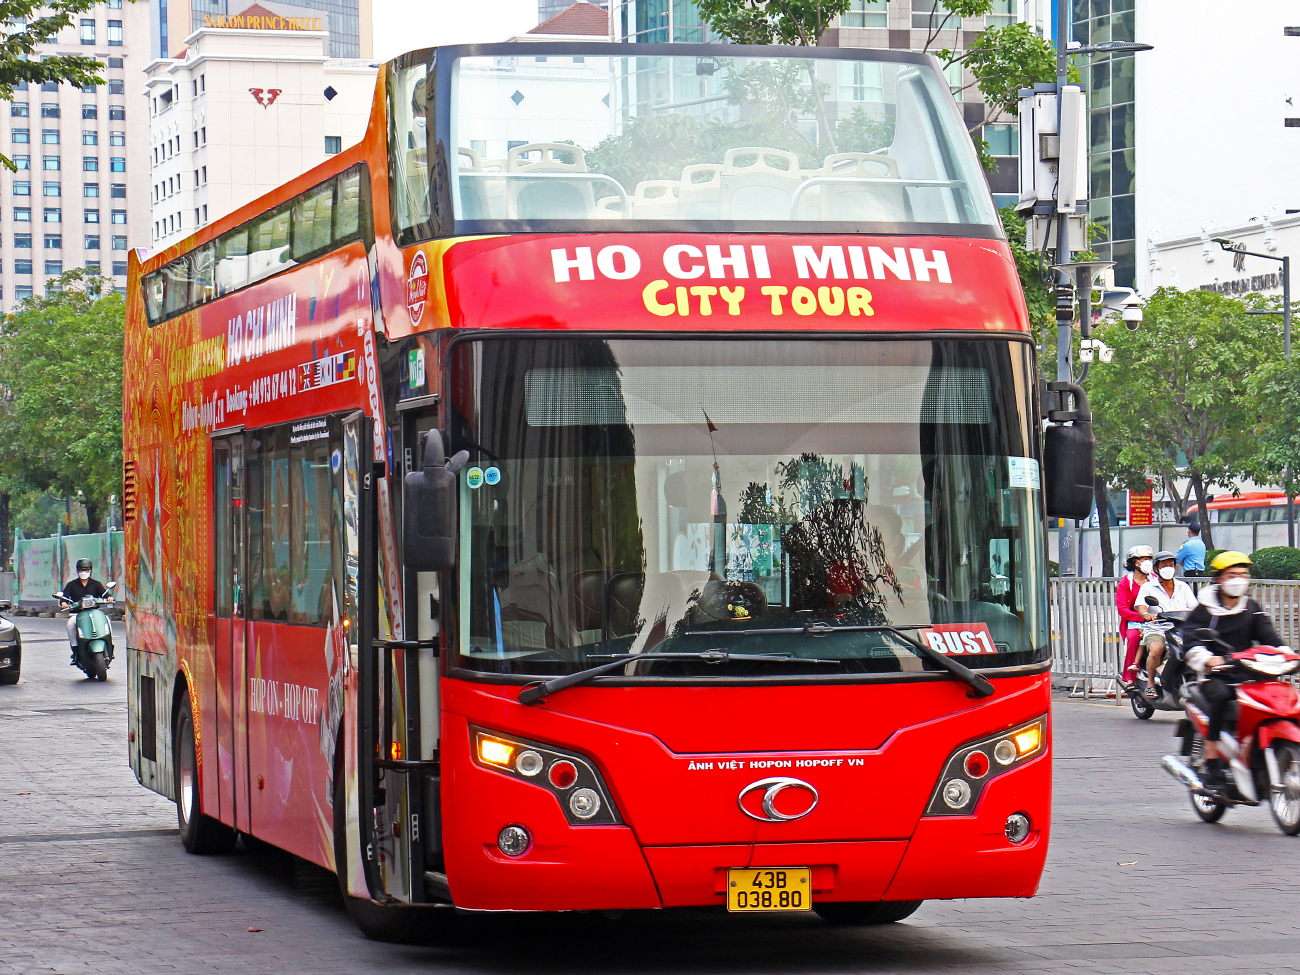 Ho Chi Minh City, Thaco TB120SS # 43B-038.80